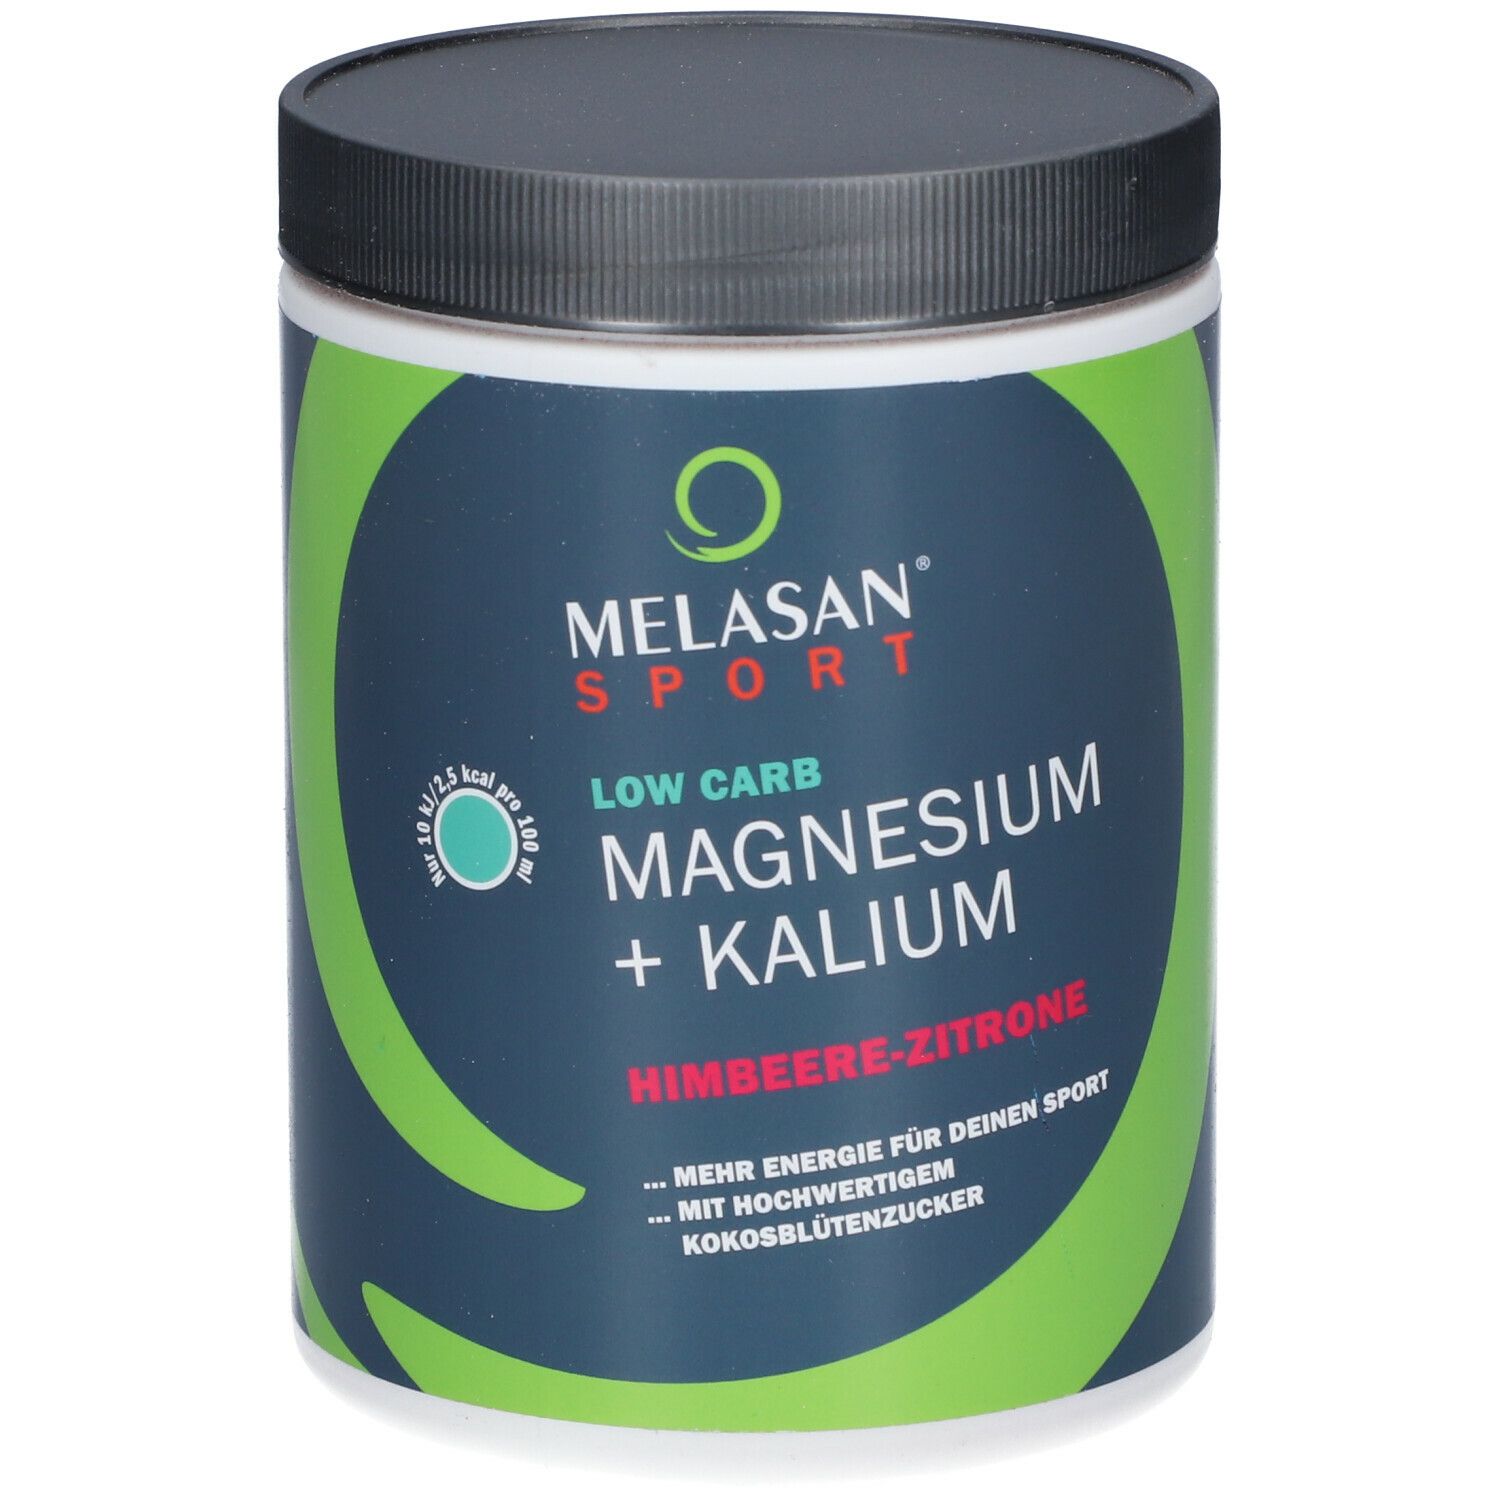 Image of MELASAN® SPORT LOW CARB MAGNESIUM + KALIUM